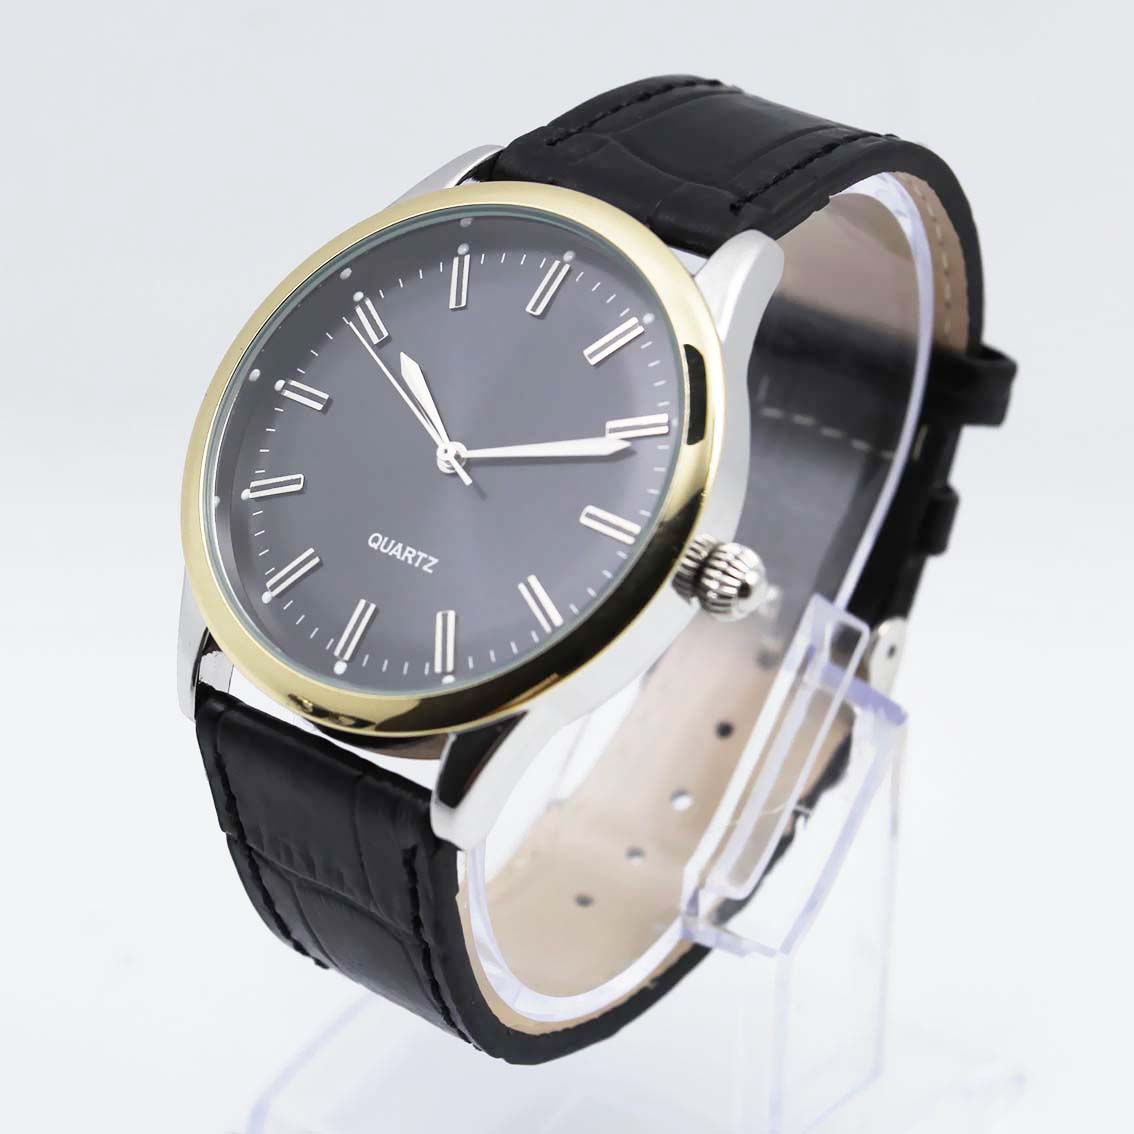 #02135Men's wristwatch quartz analog leather strap watch